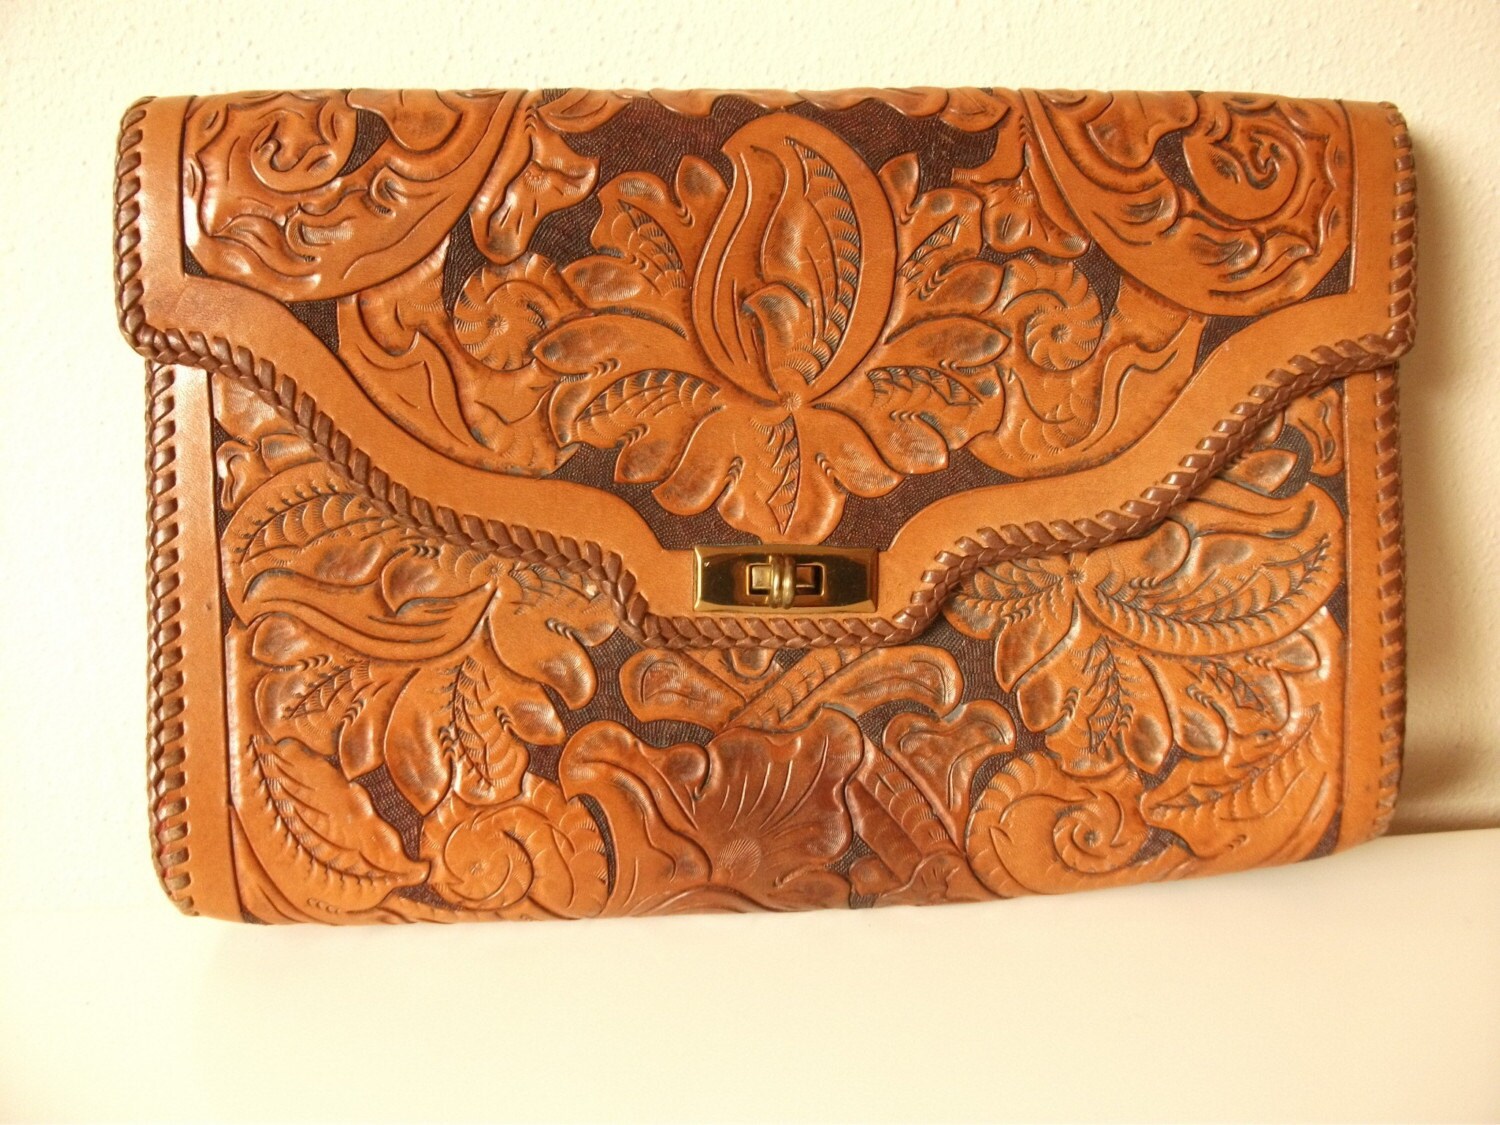 Western Hand Tooled Leather Clutch Portfolio